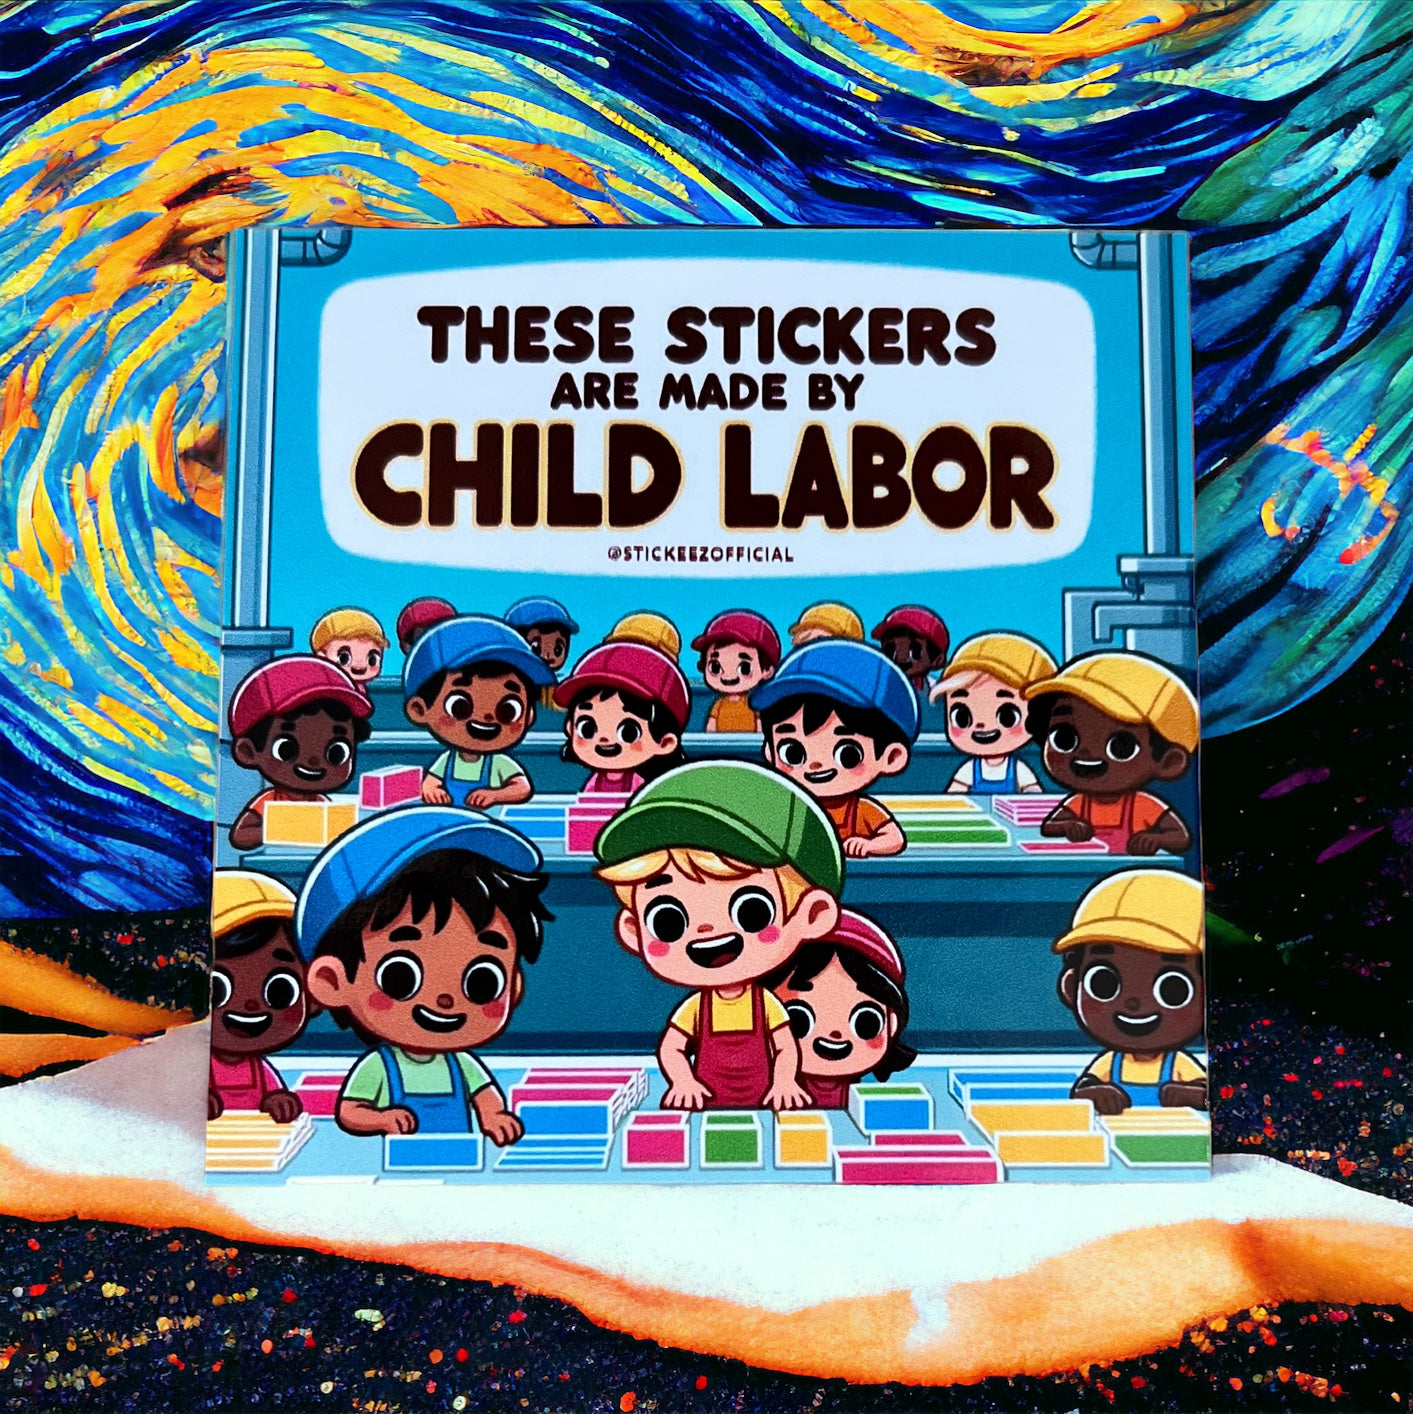 Kinderarbeit